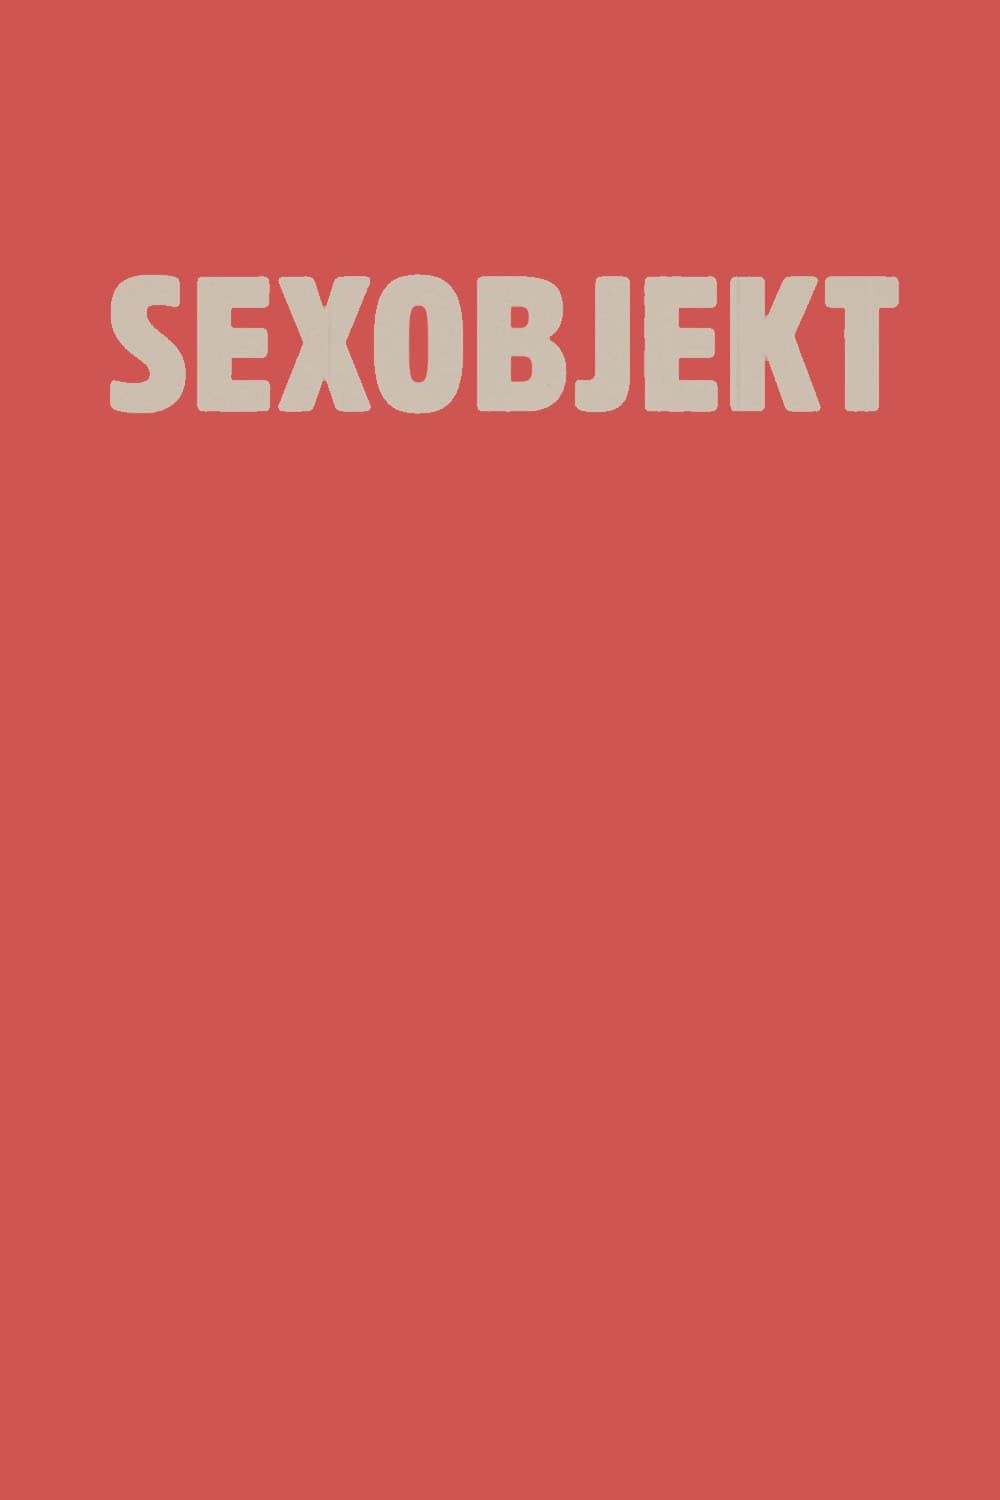 Sexobjekt